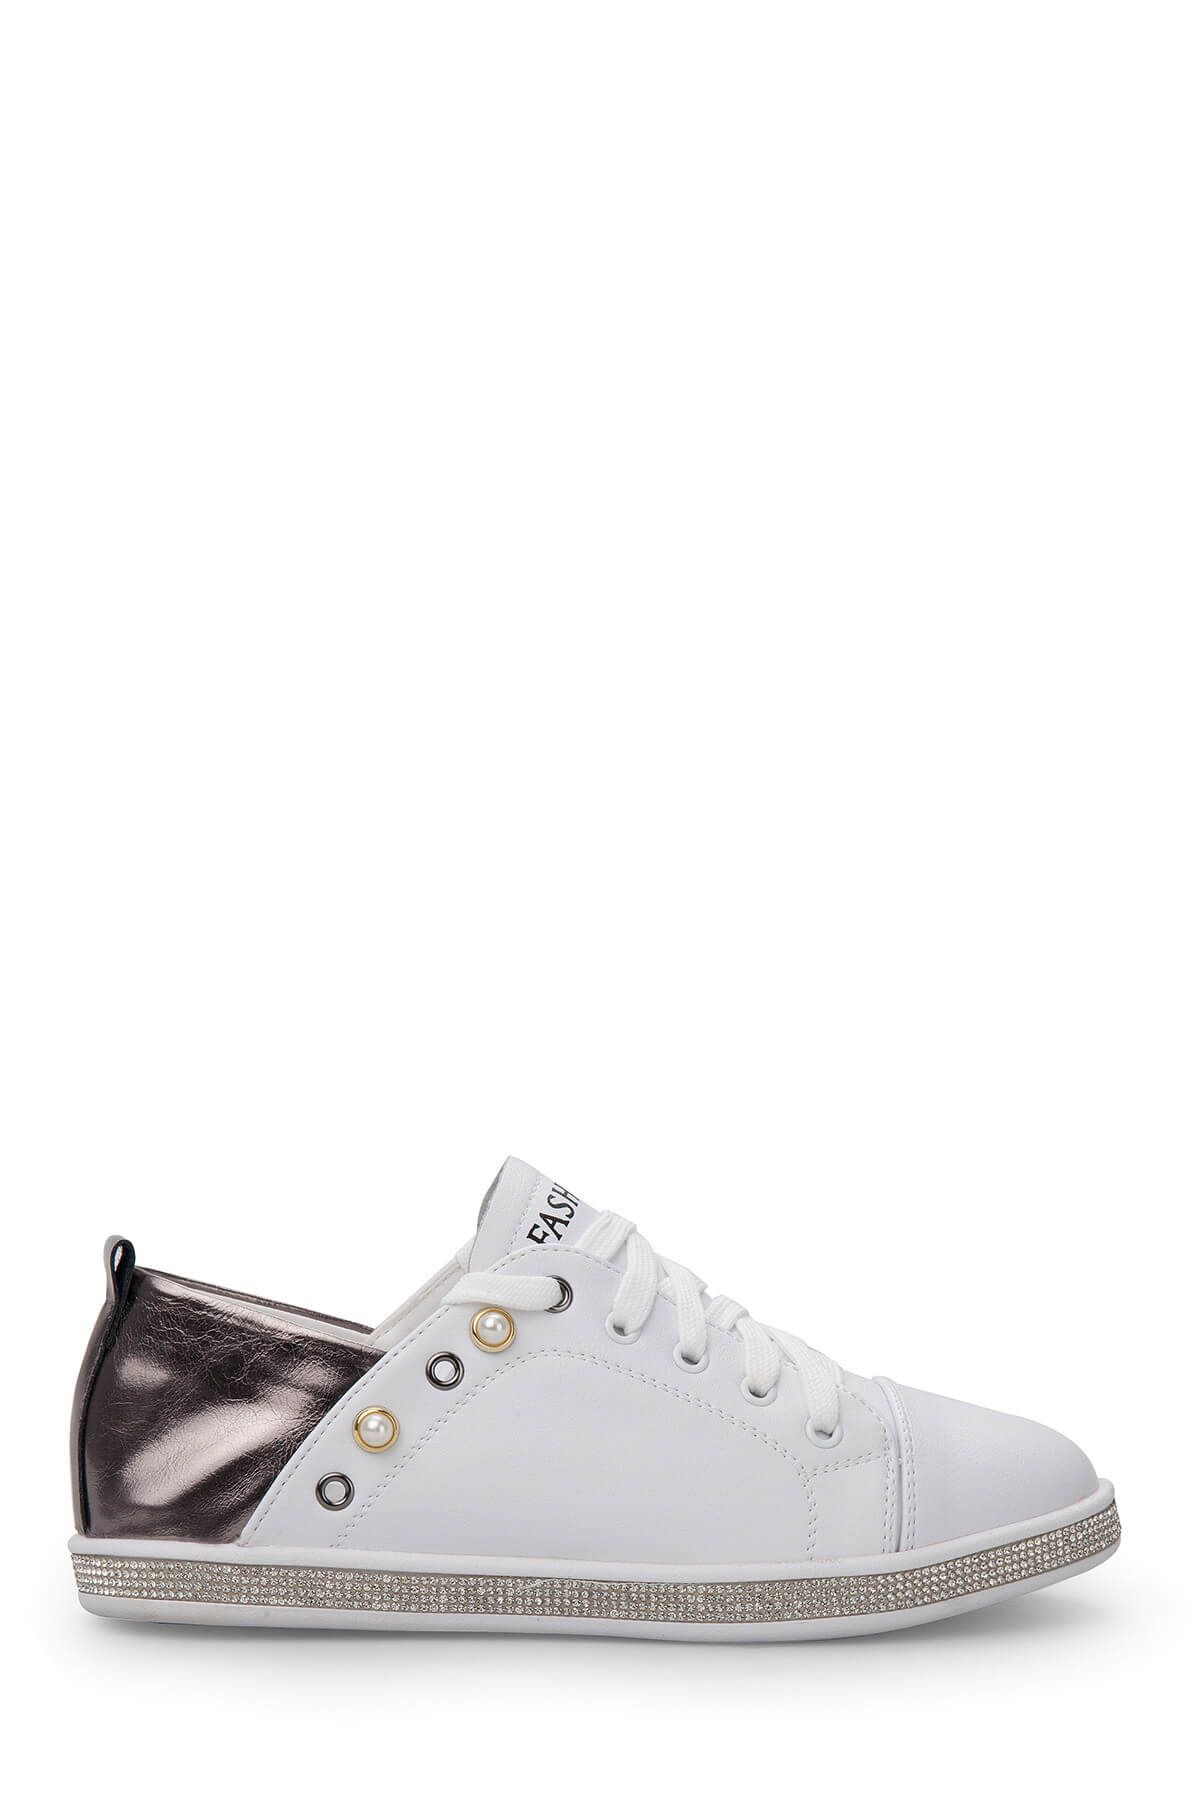 Annie Hall Kadın Pewter Sneaker - A1827508